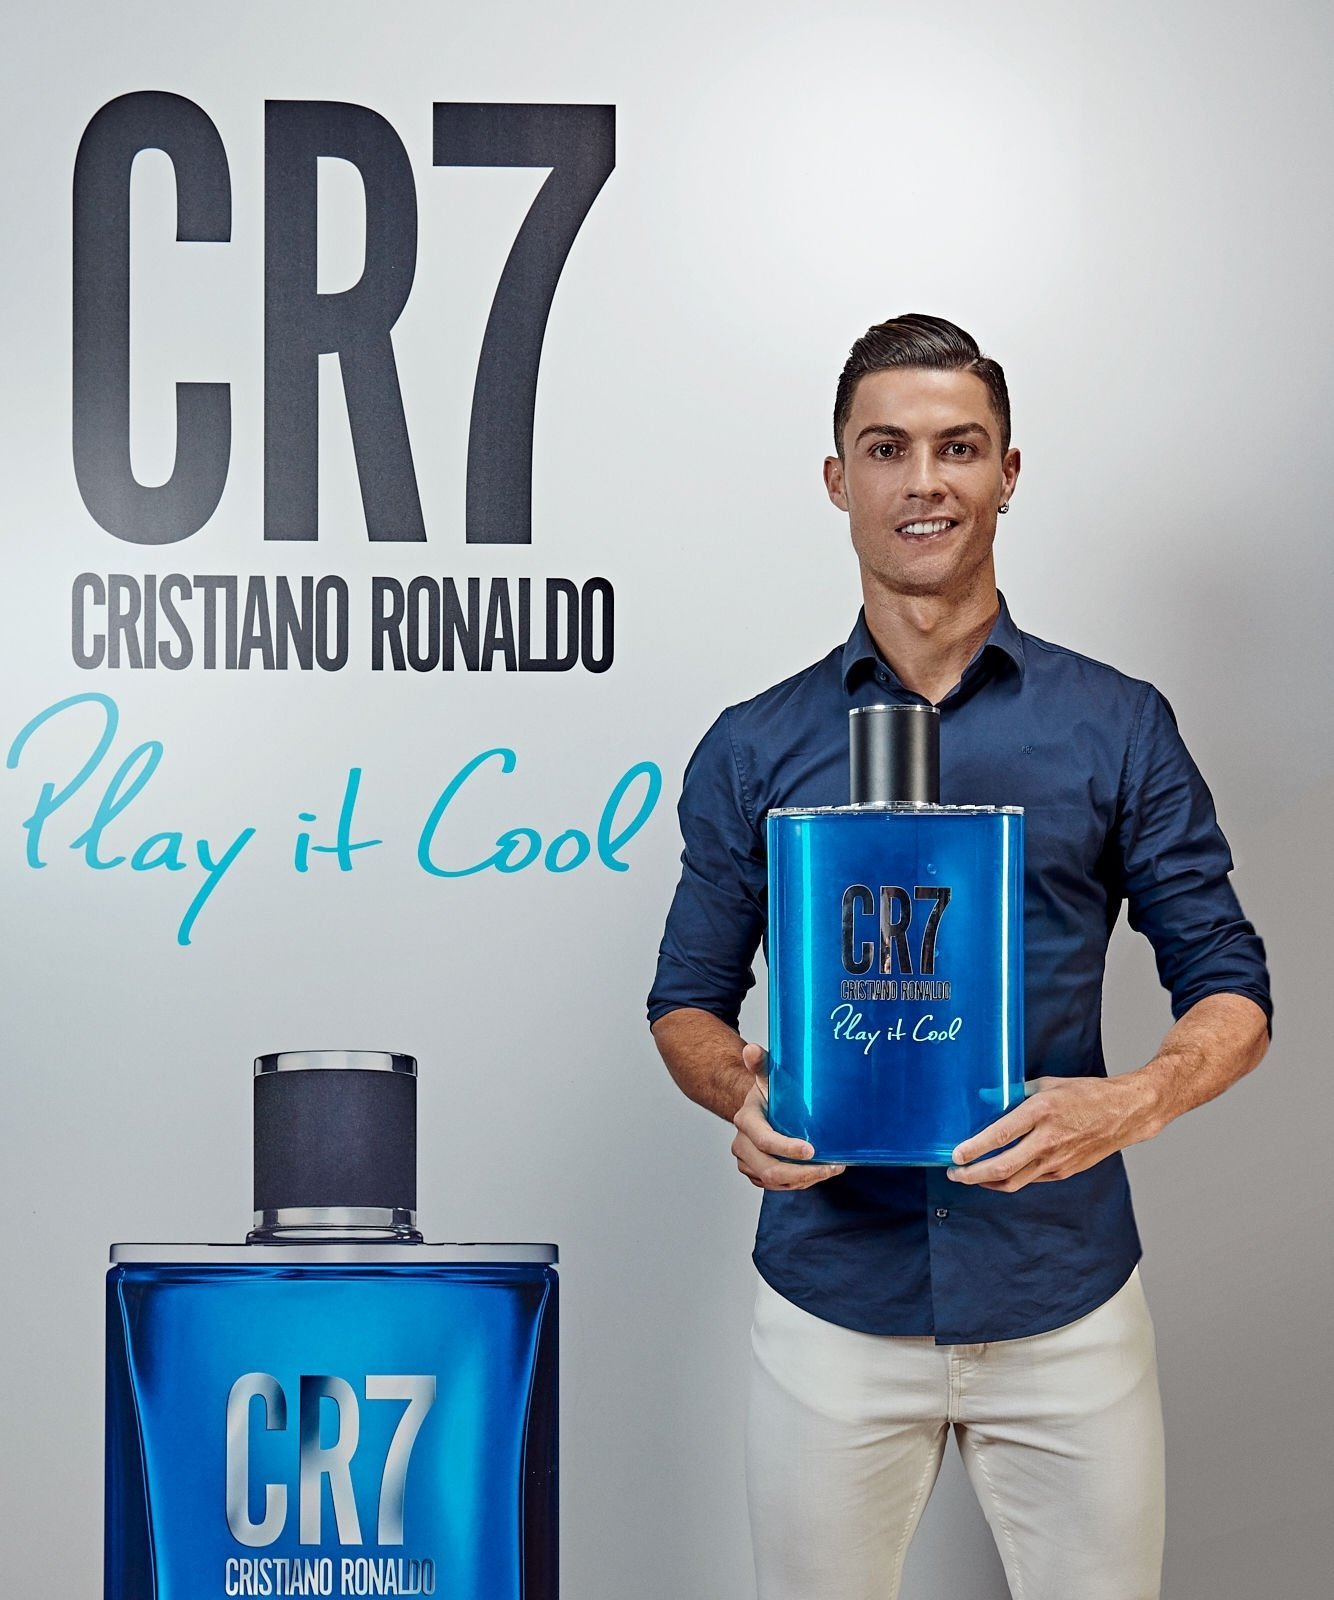 Cr7 Cristiano Ronaldo духи. Cr7 духи Play it cool. Cristiano Ronaldo cr7 Play it cool Парфюм. Ronaldo аромат cr7. Духи криштиану роналду